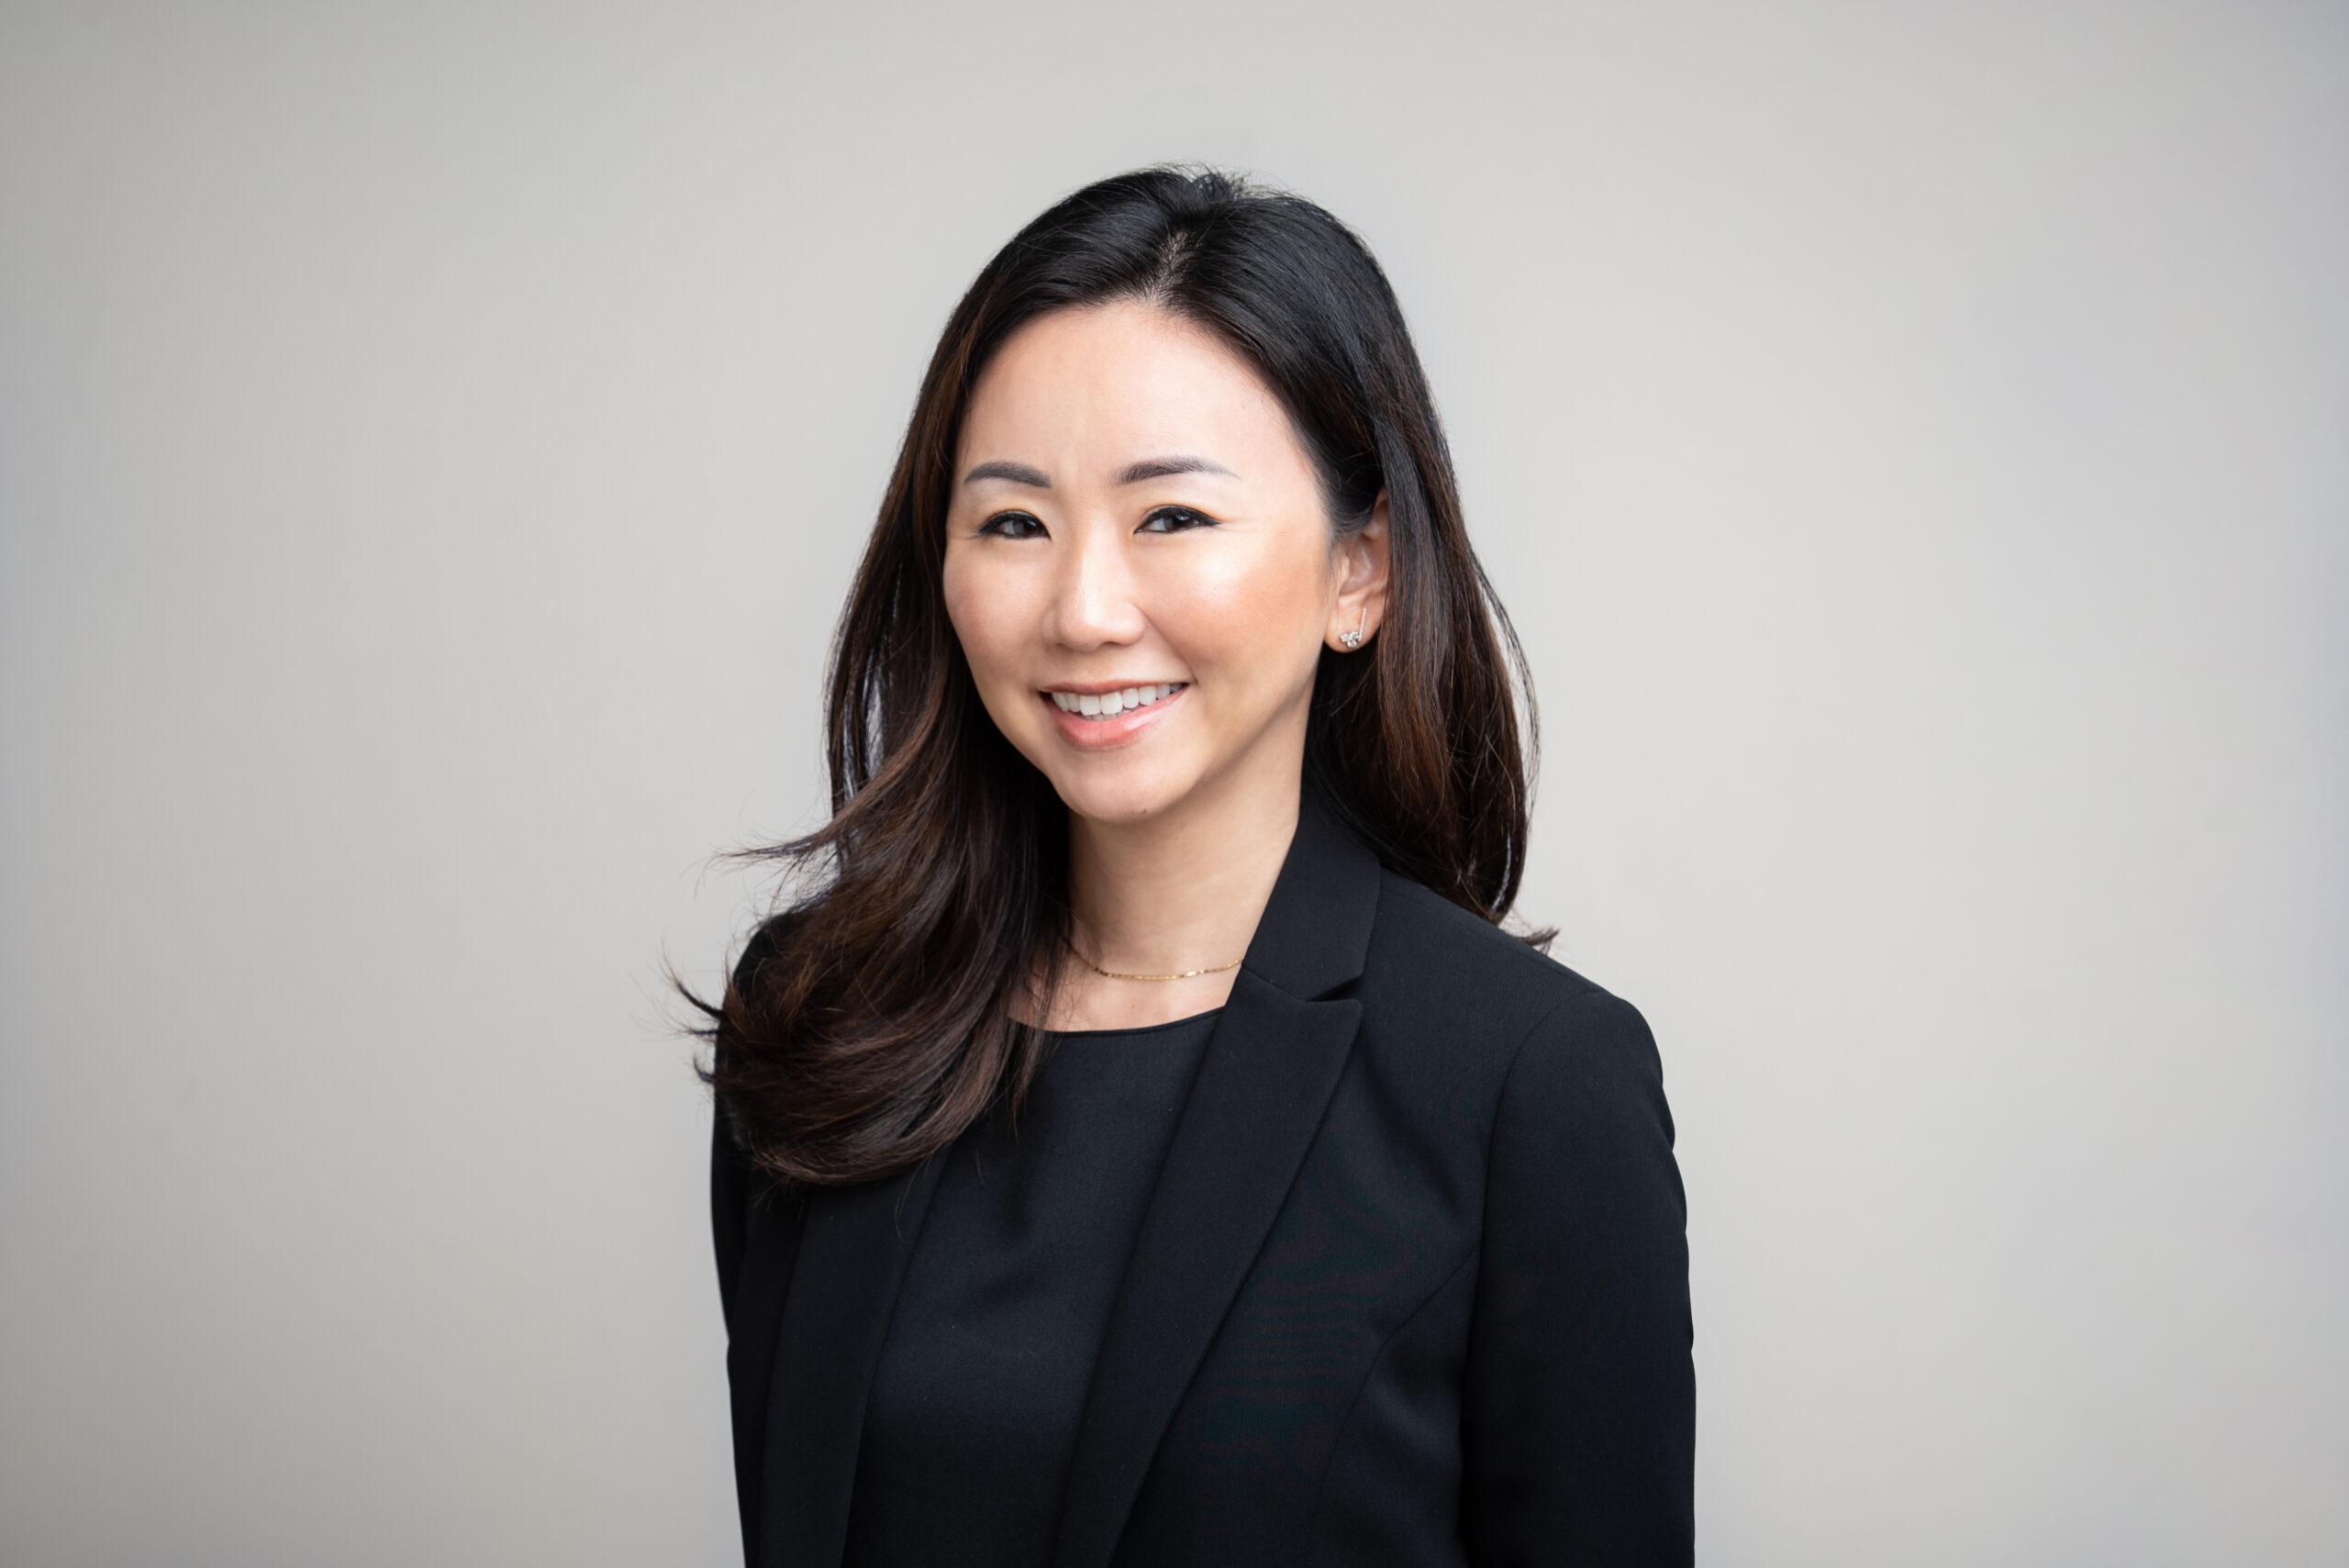 Founder of Hong Kong Divorce, Caroline Choi